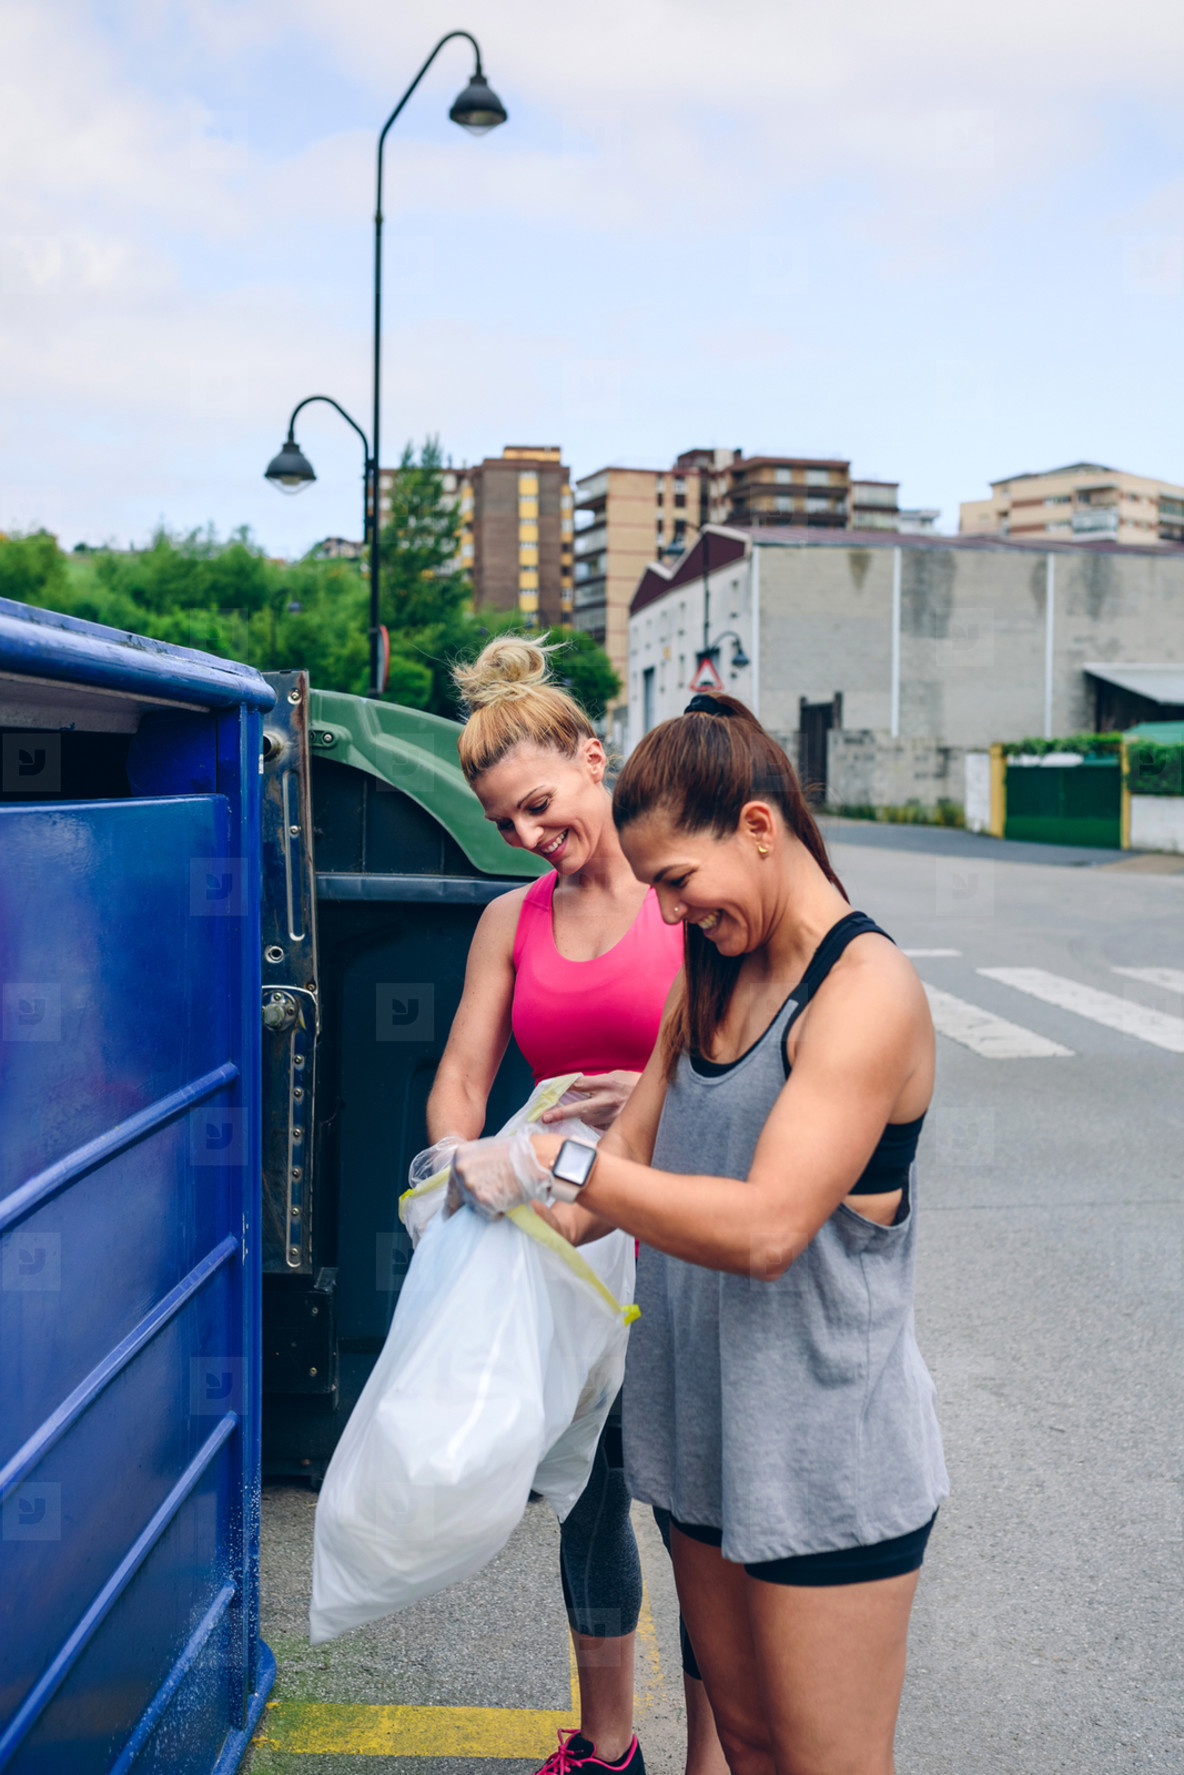 Girls throwing garbage to recycling dumpster